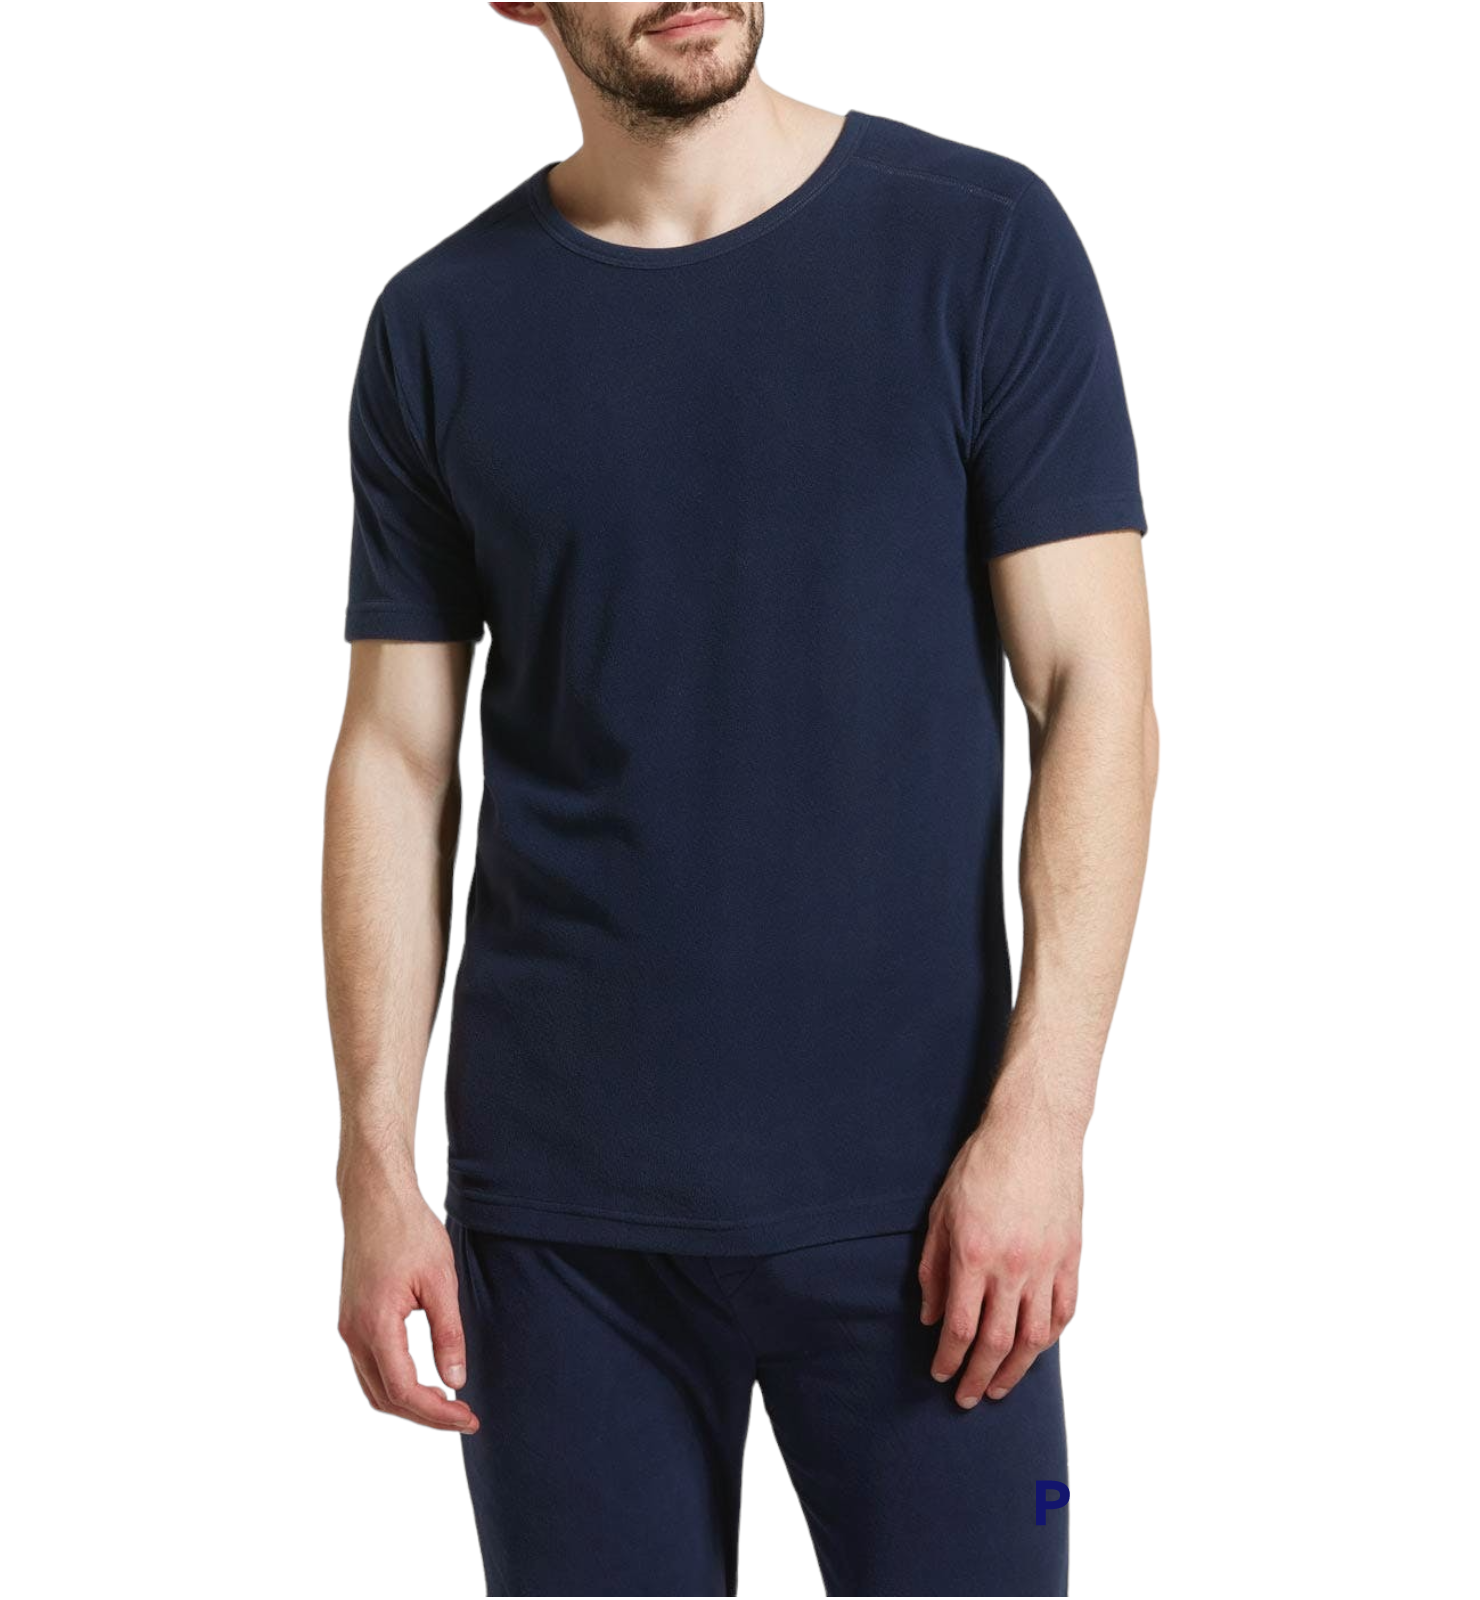 Mens Thermal Short Sleeve Top Microfleece Baselayer Underwear T Shirt - Navy - S